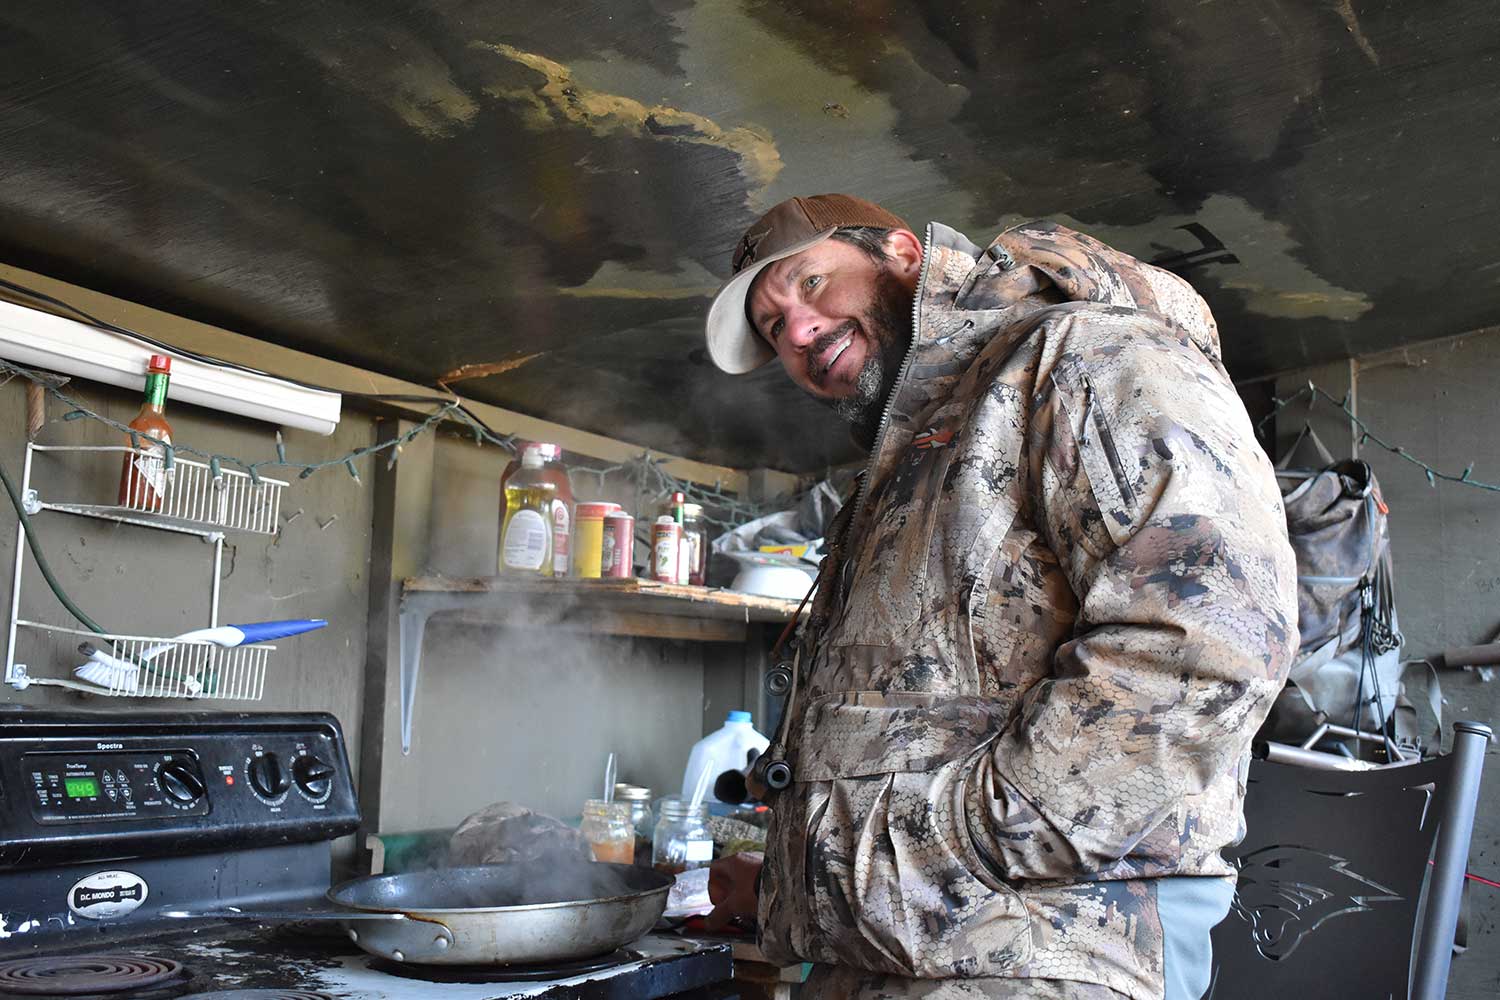 A hunter cooking breakfast inside a duck blind.